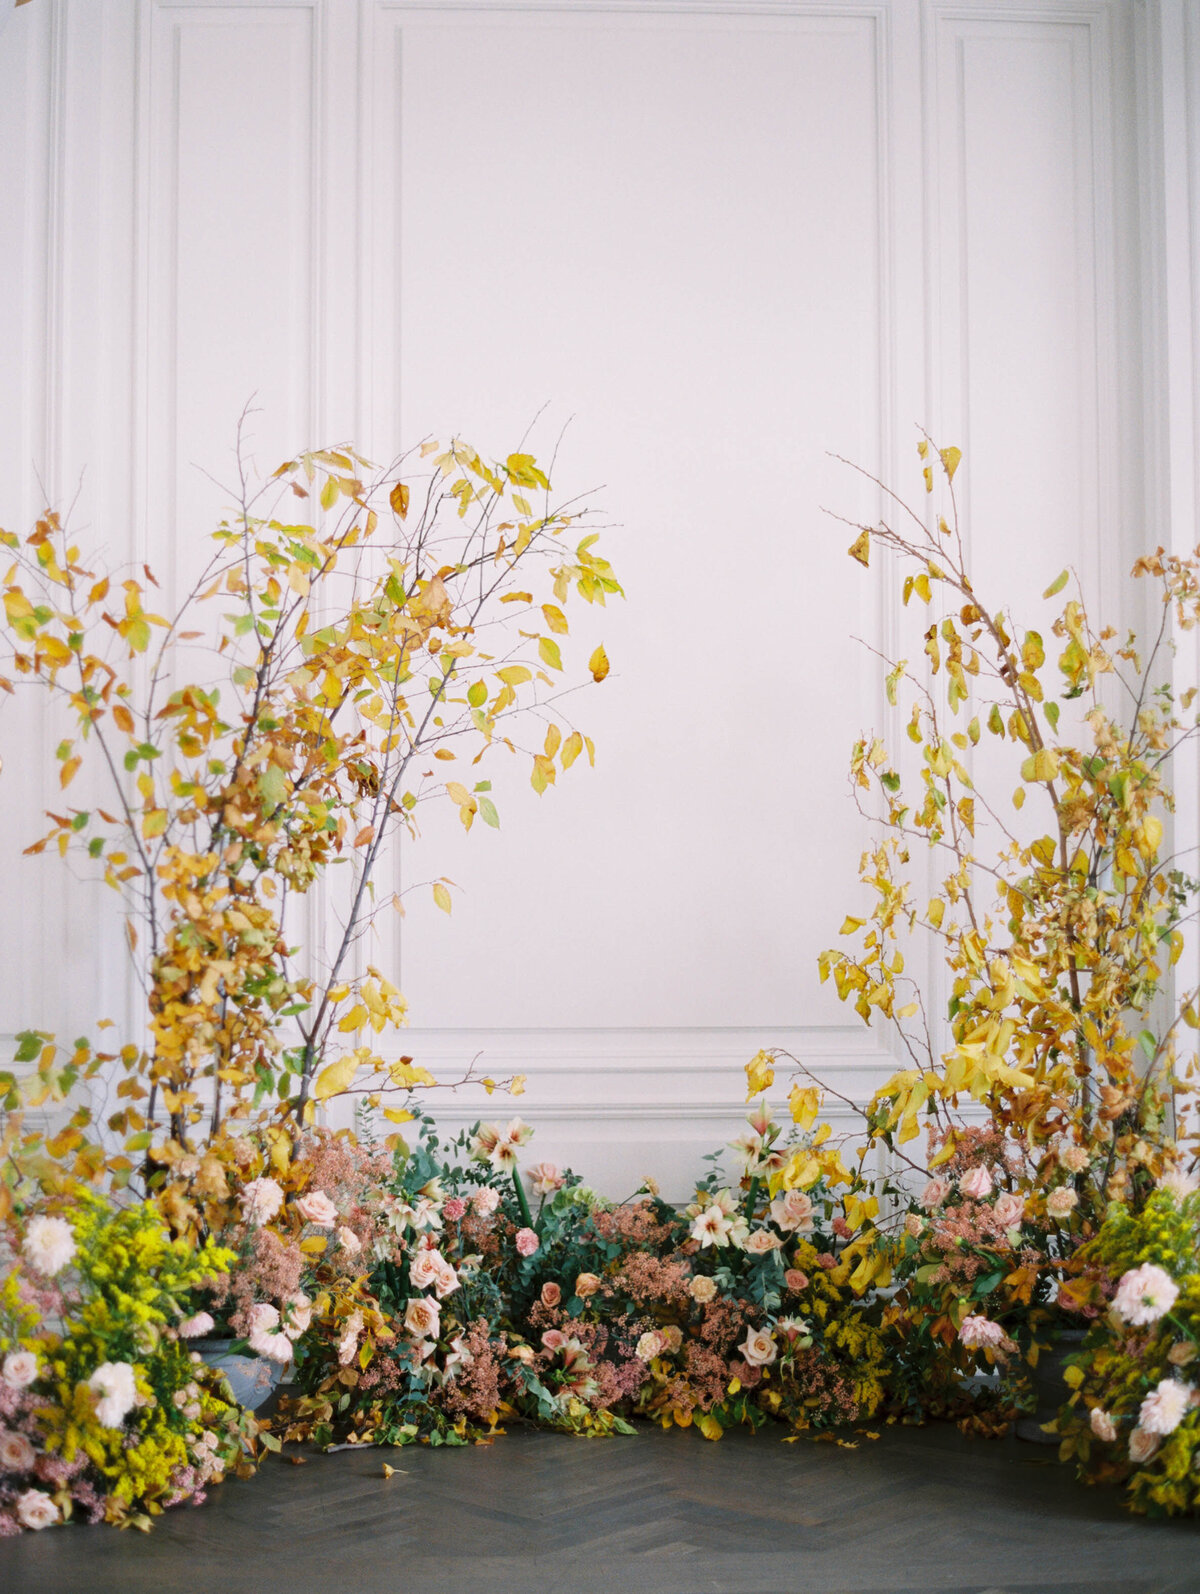 max-owens-design-yellow-wedding-flowers-01-installation